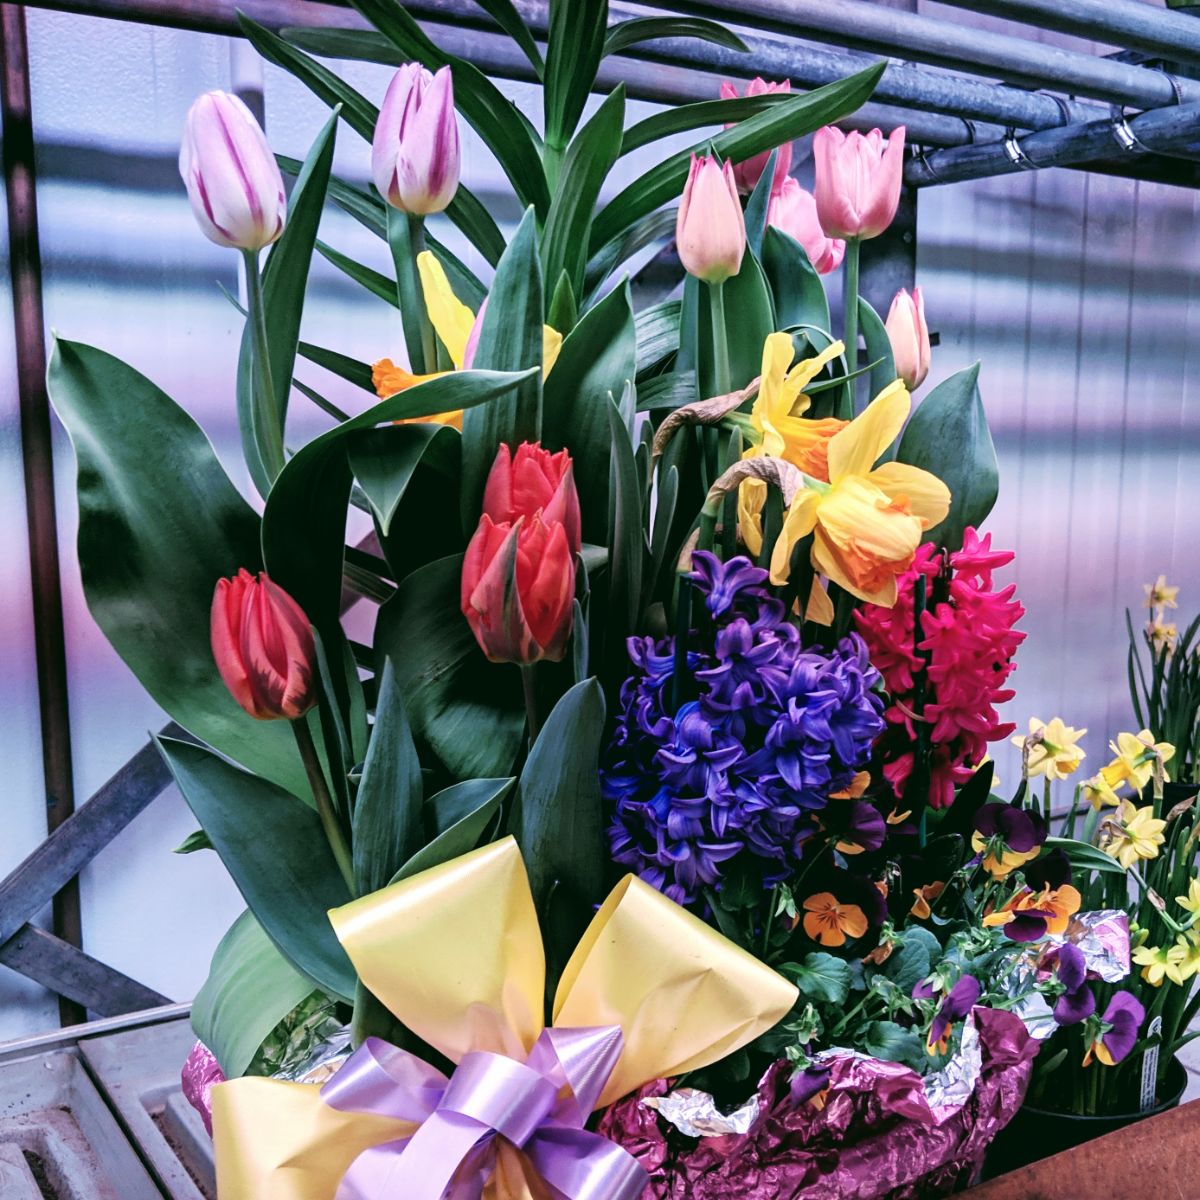 Easter flower centerpiece arrangement at Ott's Greenhouse in 2019